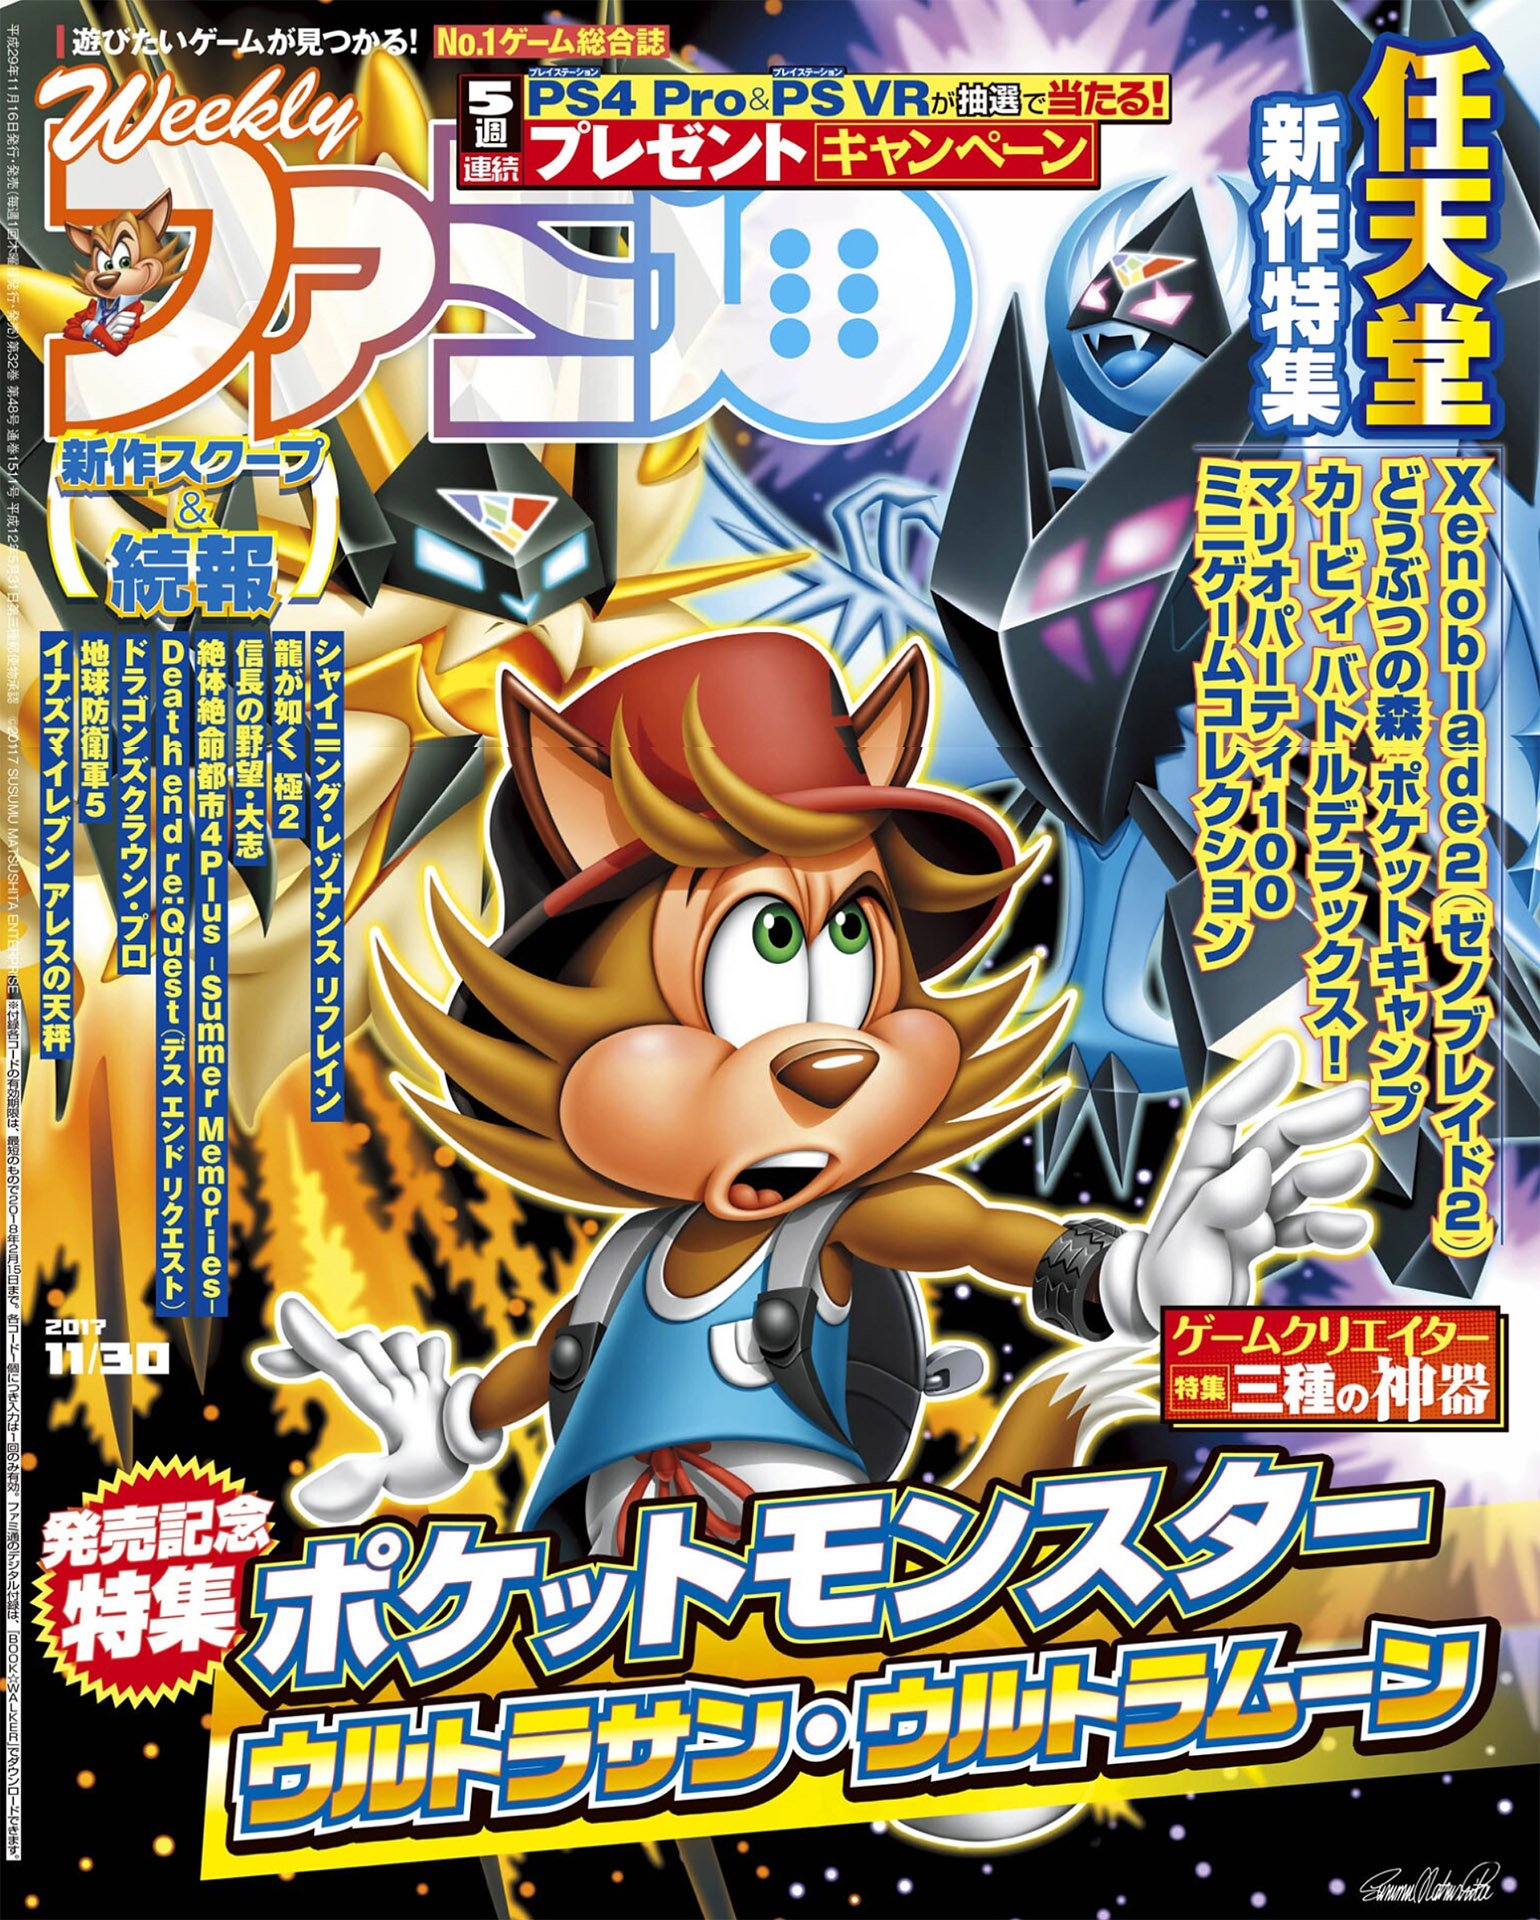 Famitsu 1511 (November 30, 2017)